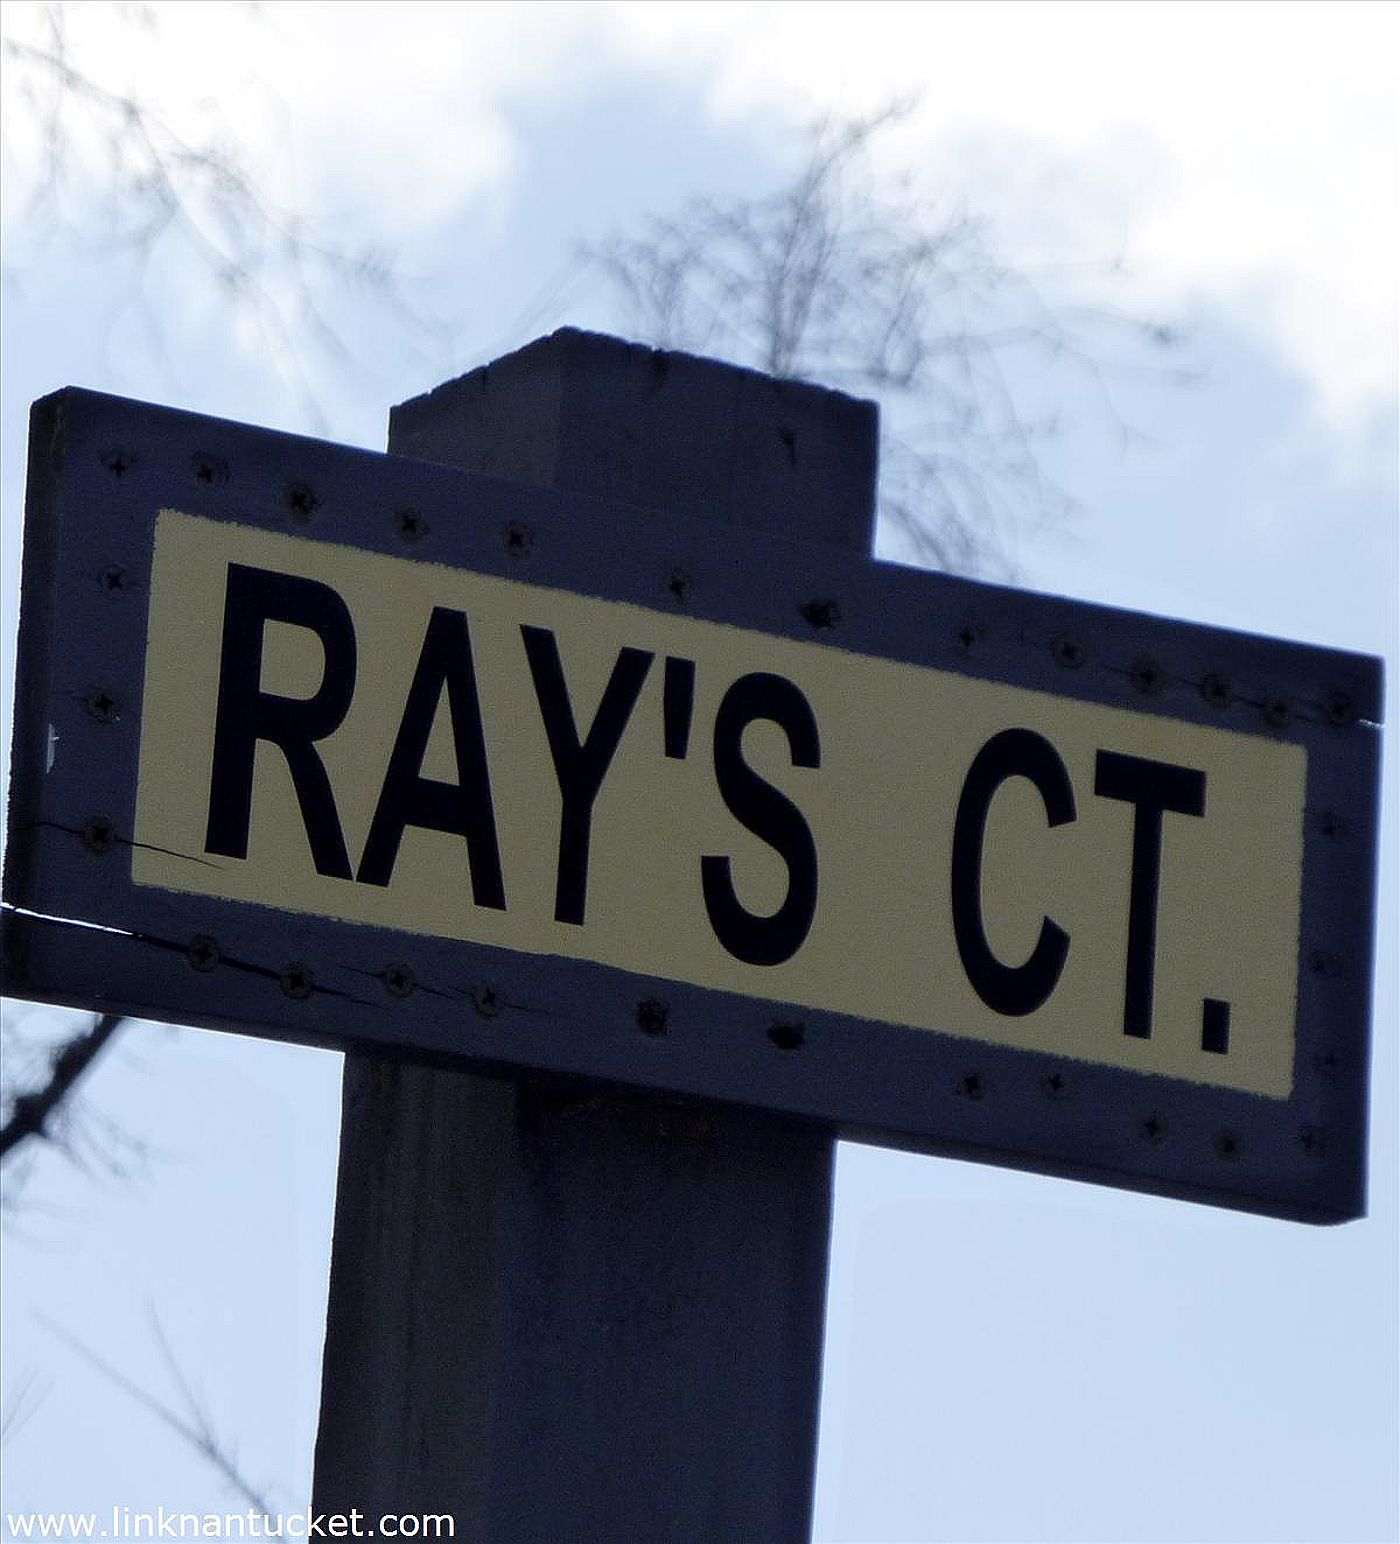 6 Rays Court Nantucket MA